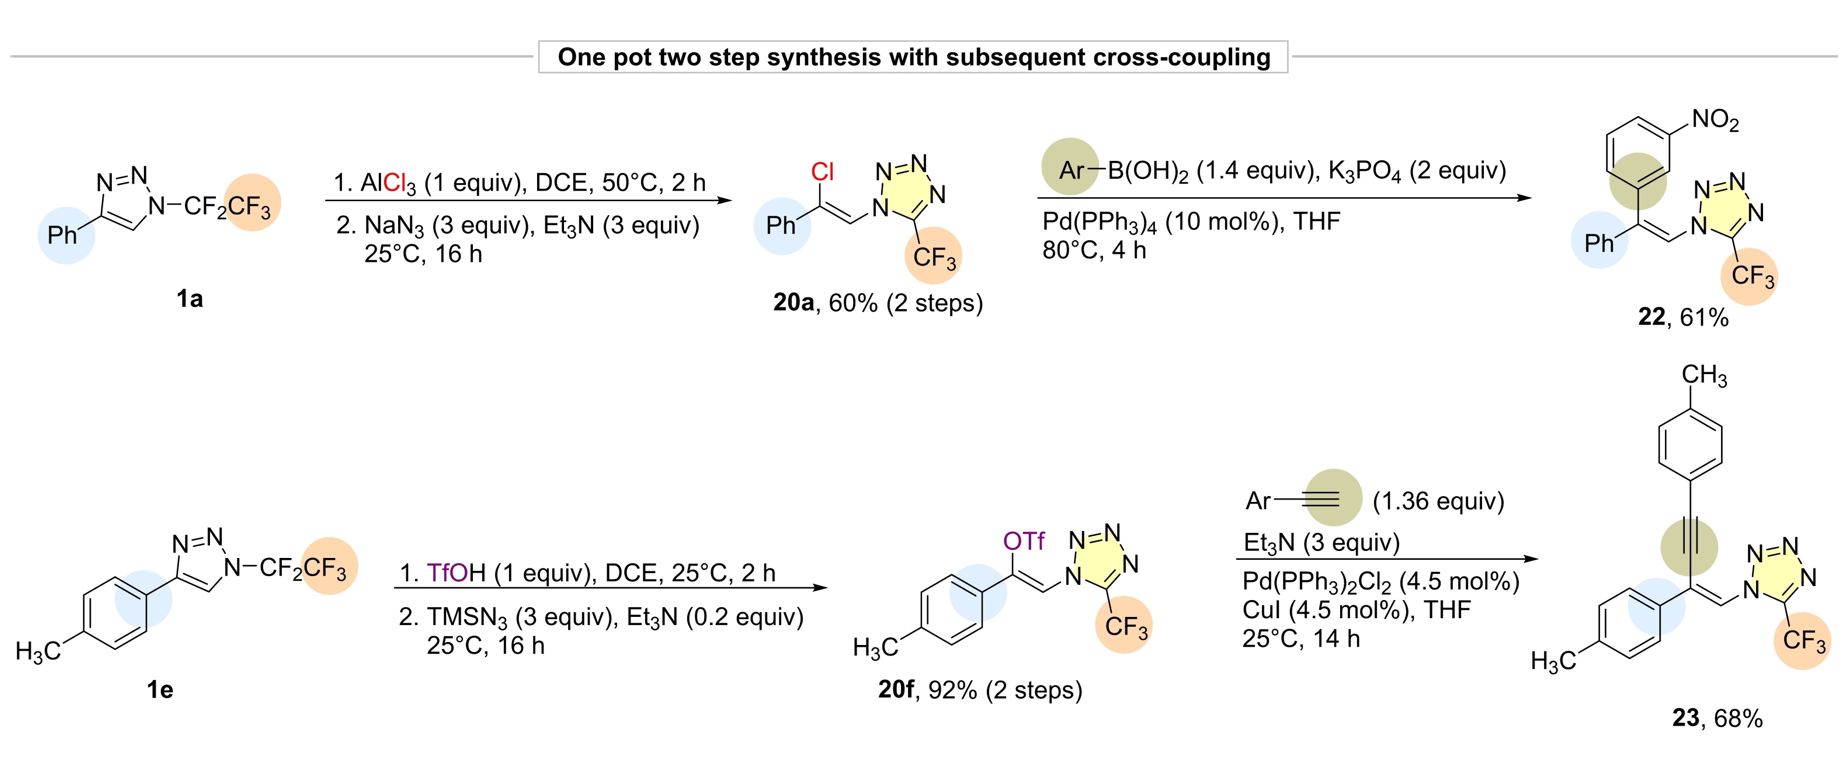 Novel synthetic pathway leading to N-alkenyl building blocks